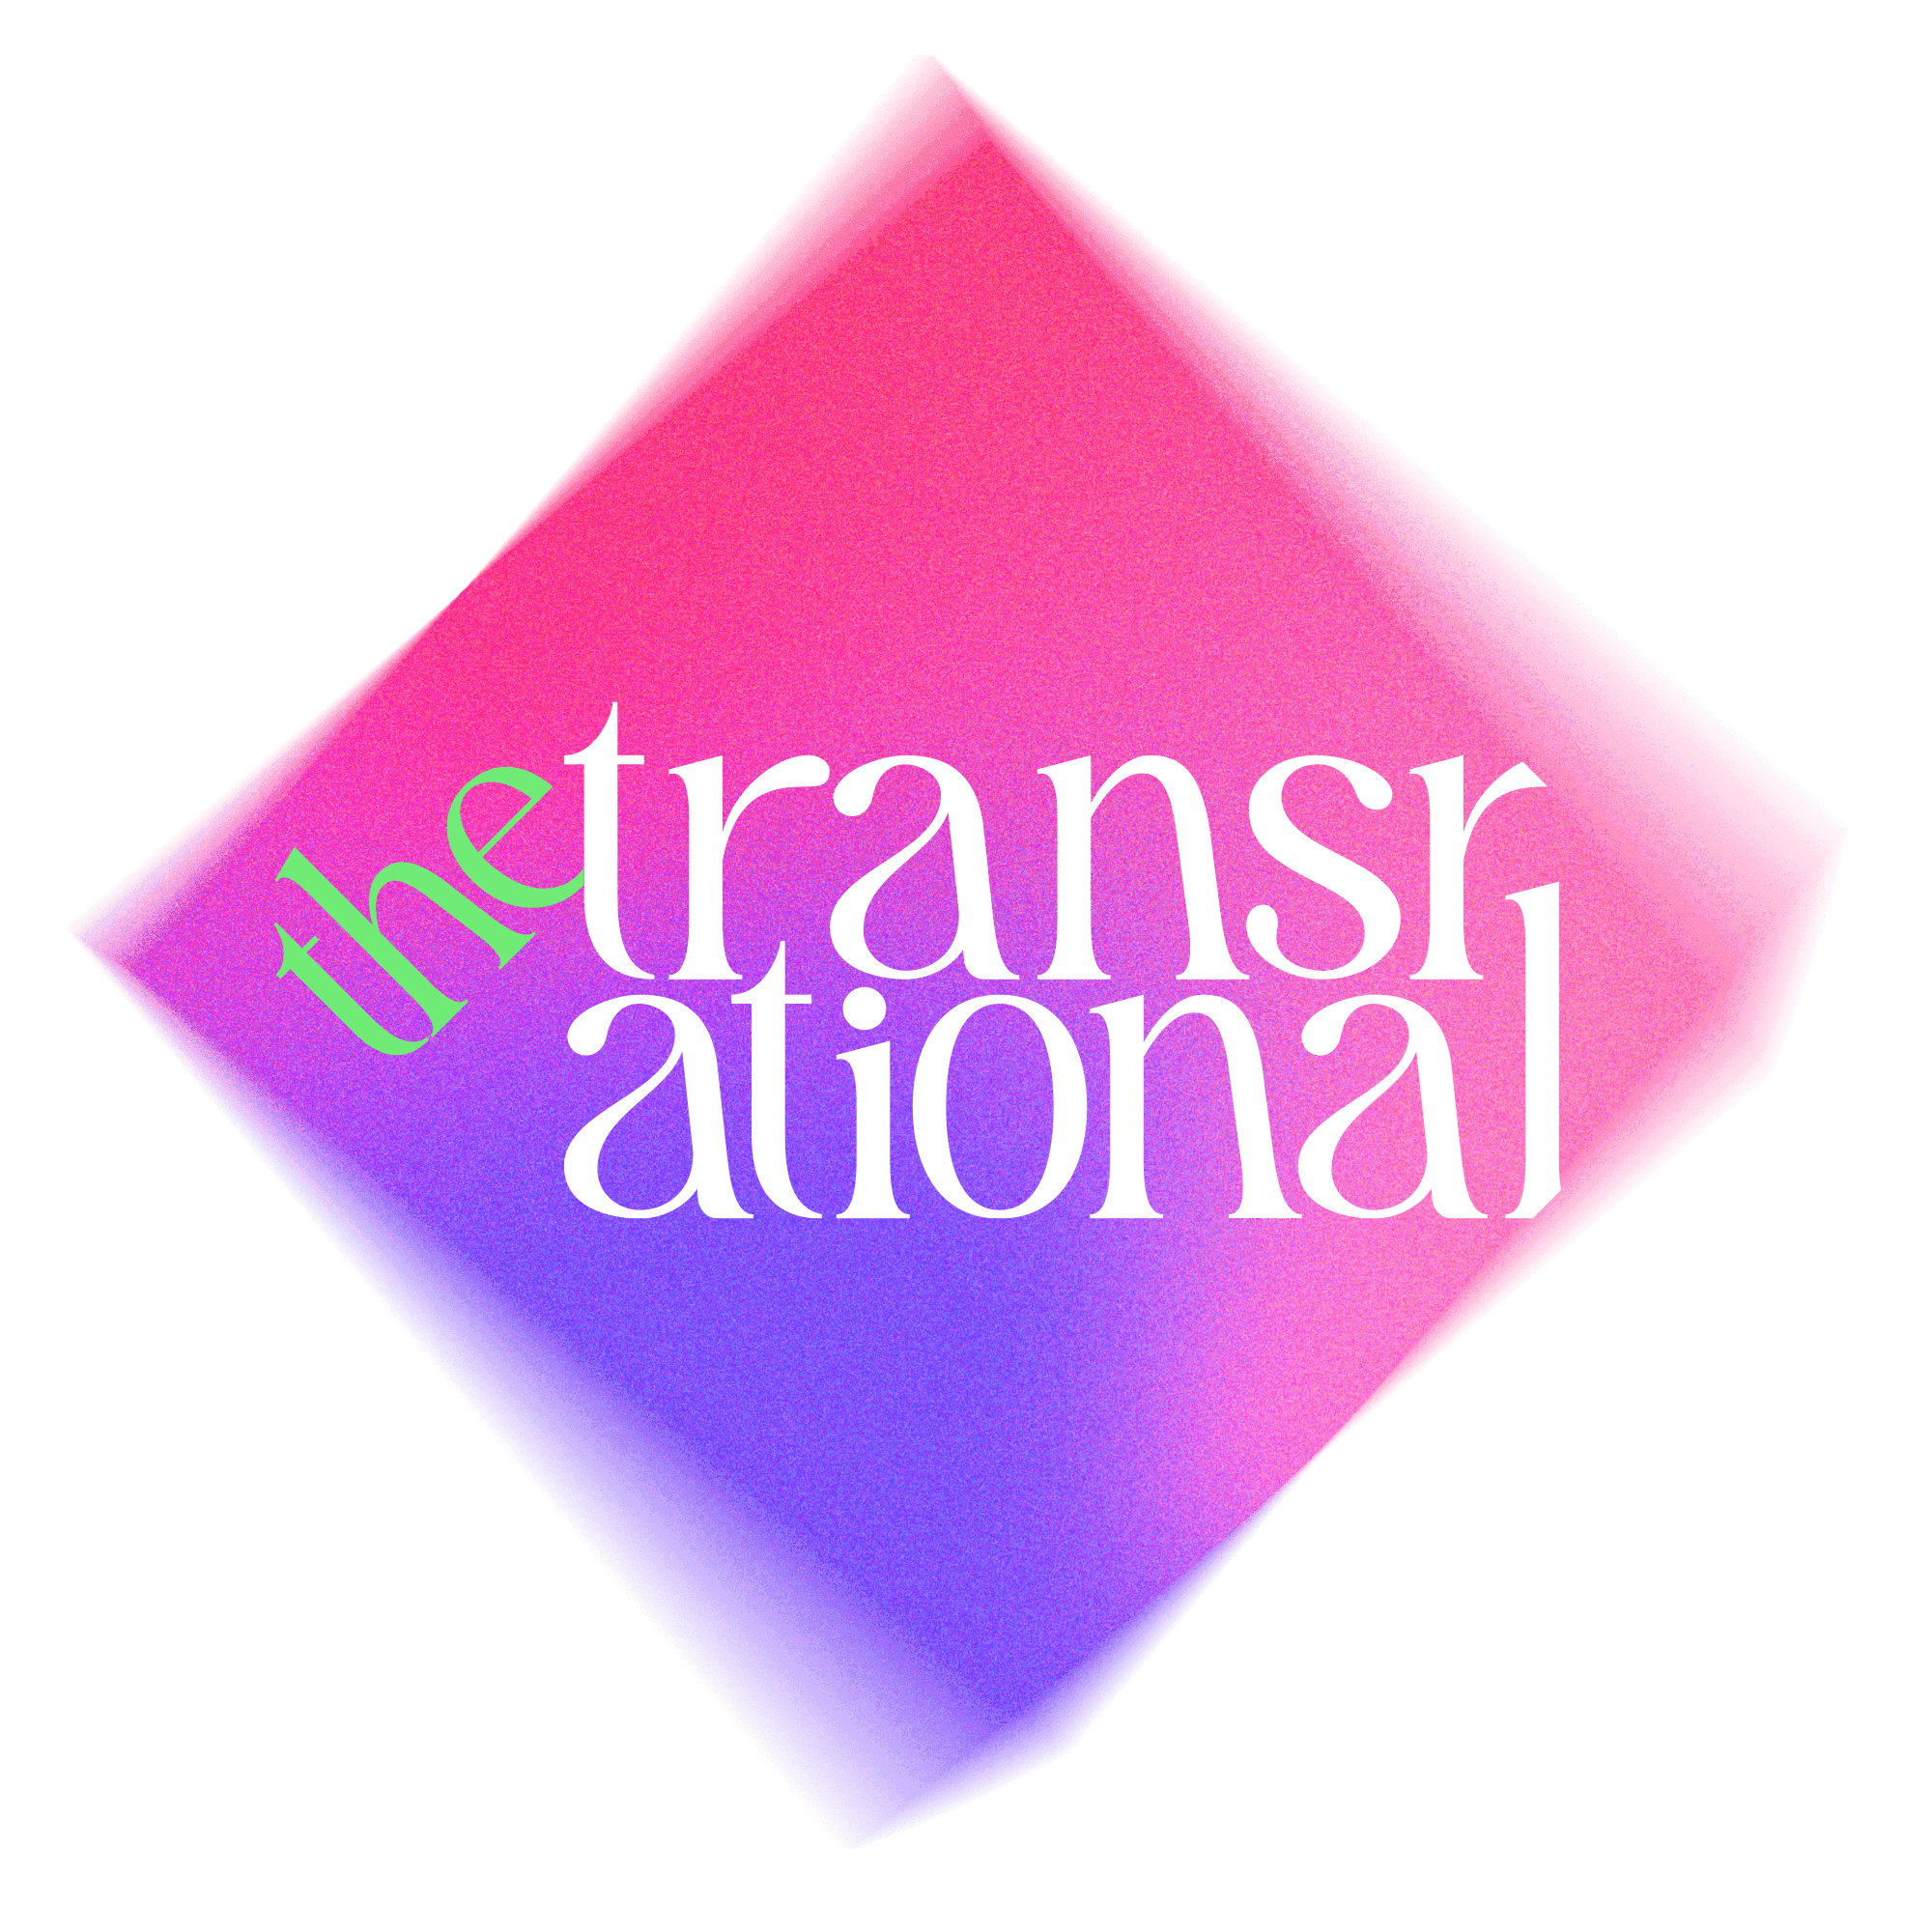 THE TRANSRATIONAL